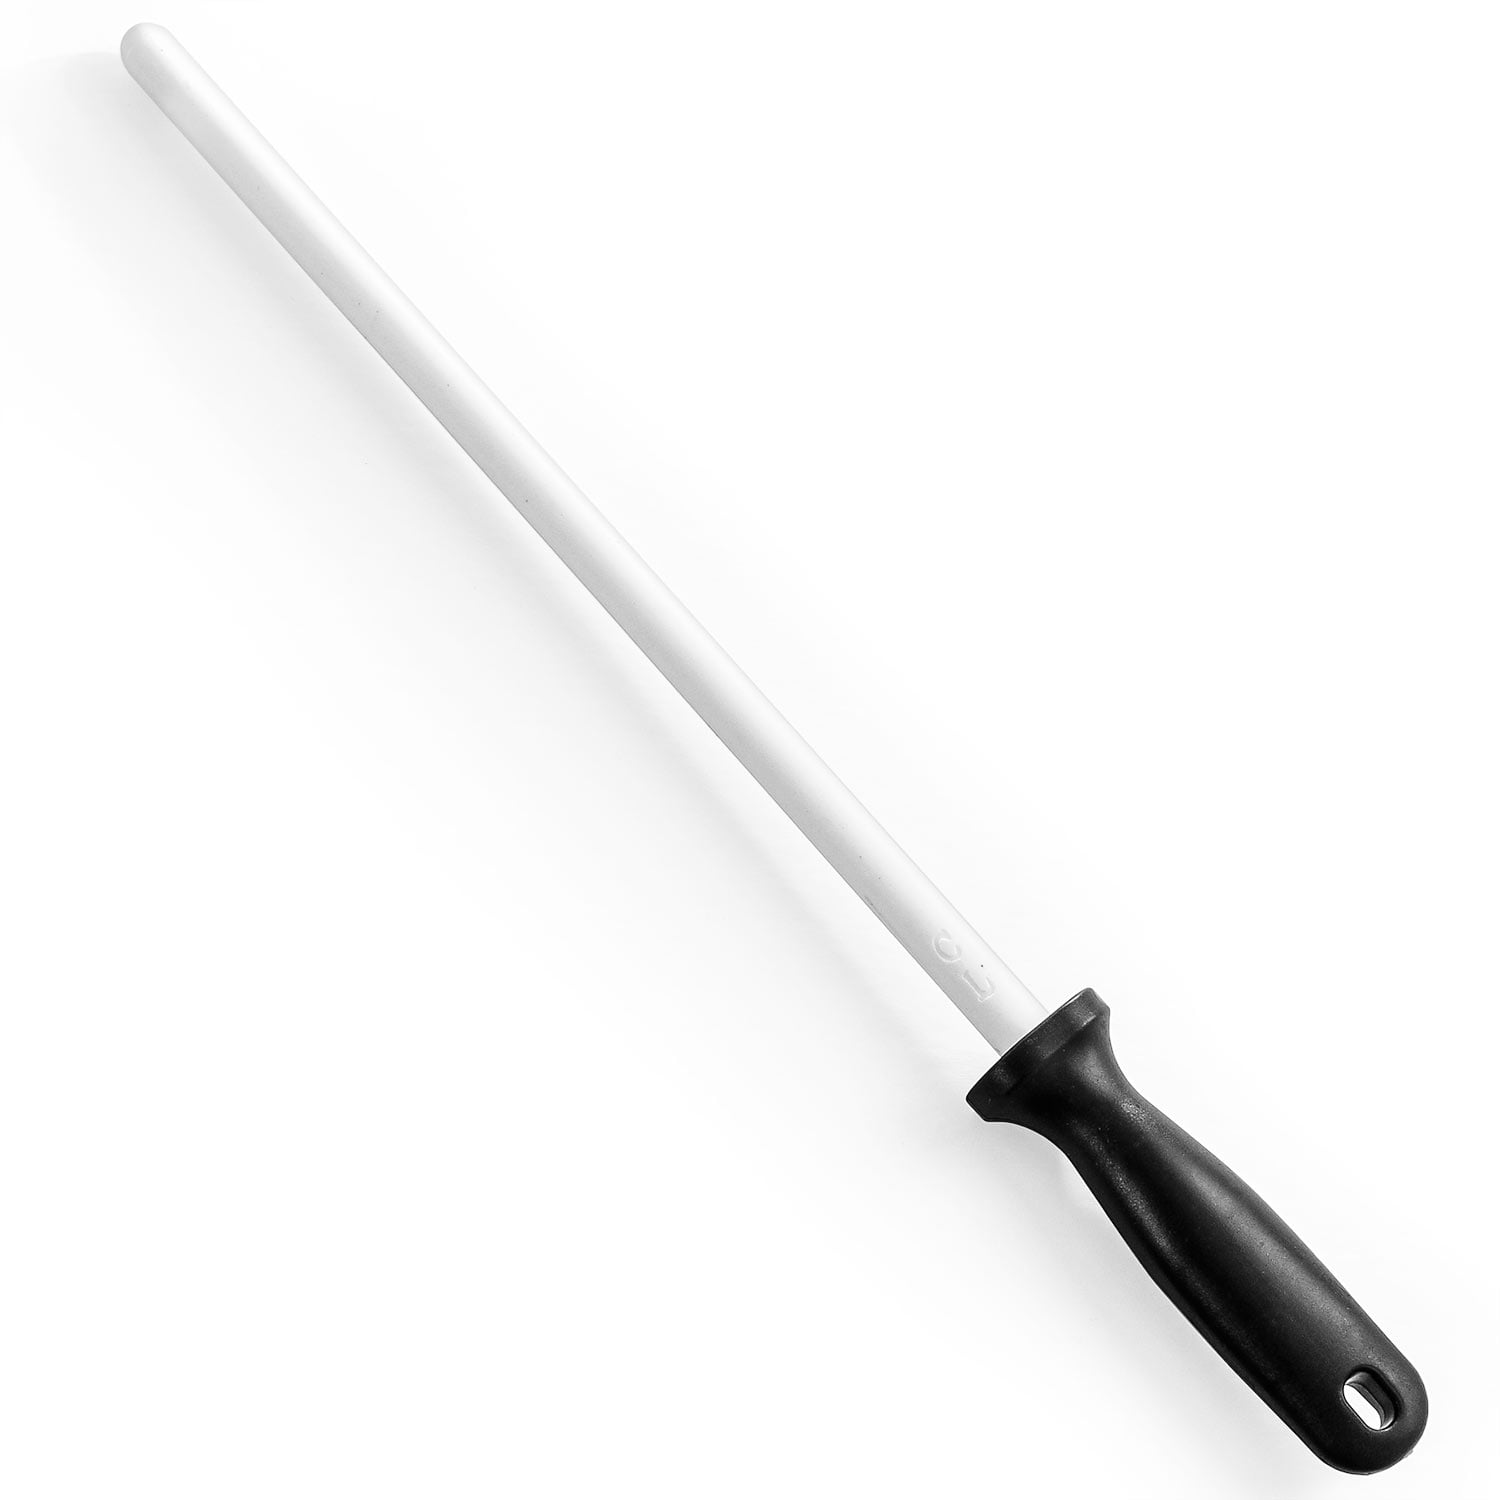 Biltek 12 Ceramic Sharpening Rod Stick Sharpener with ABS Handle